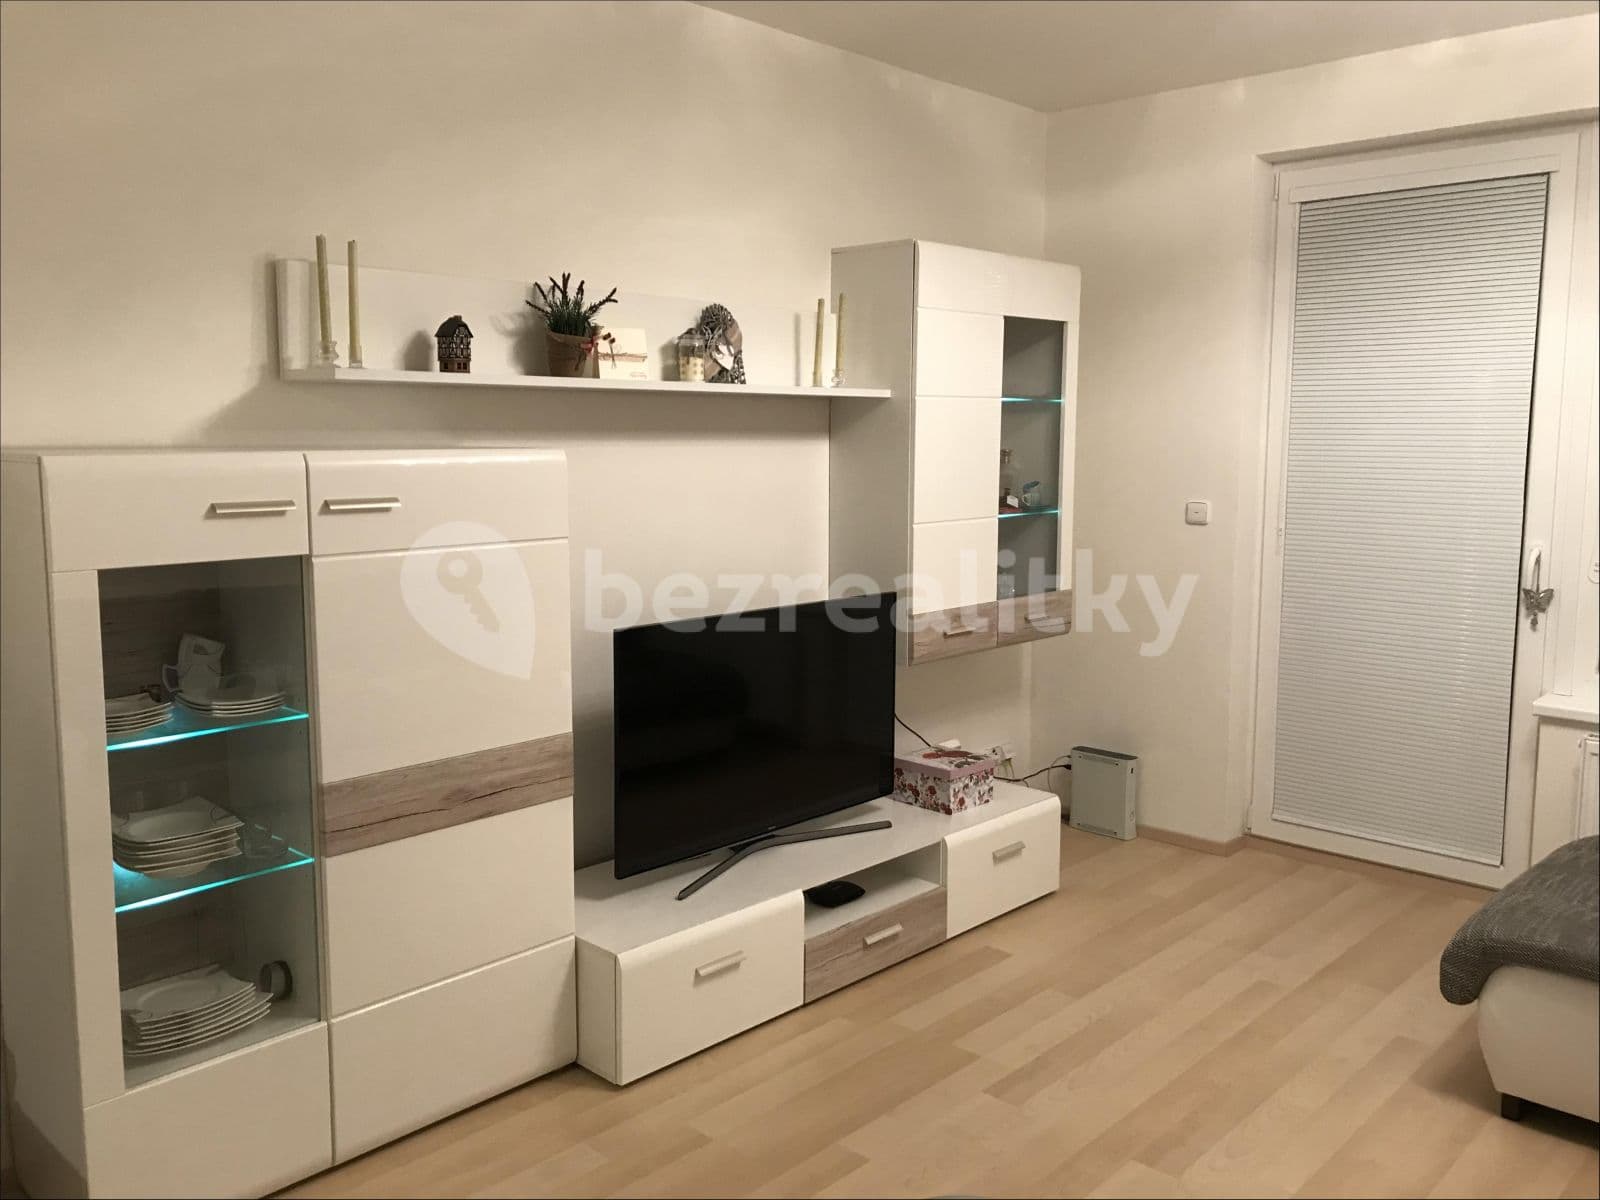 1 bedroom with open-plan kitchen flat to rent, 55 m², Sazovická, Prague, Prague